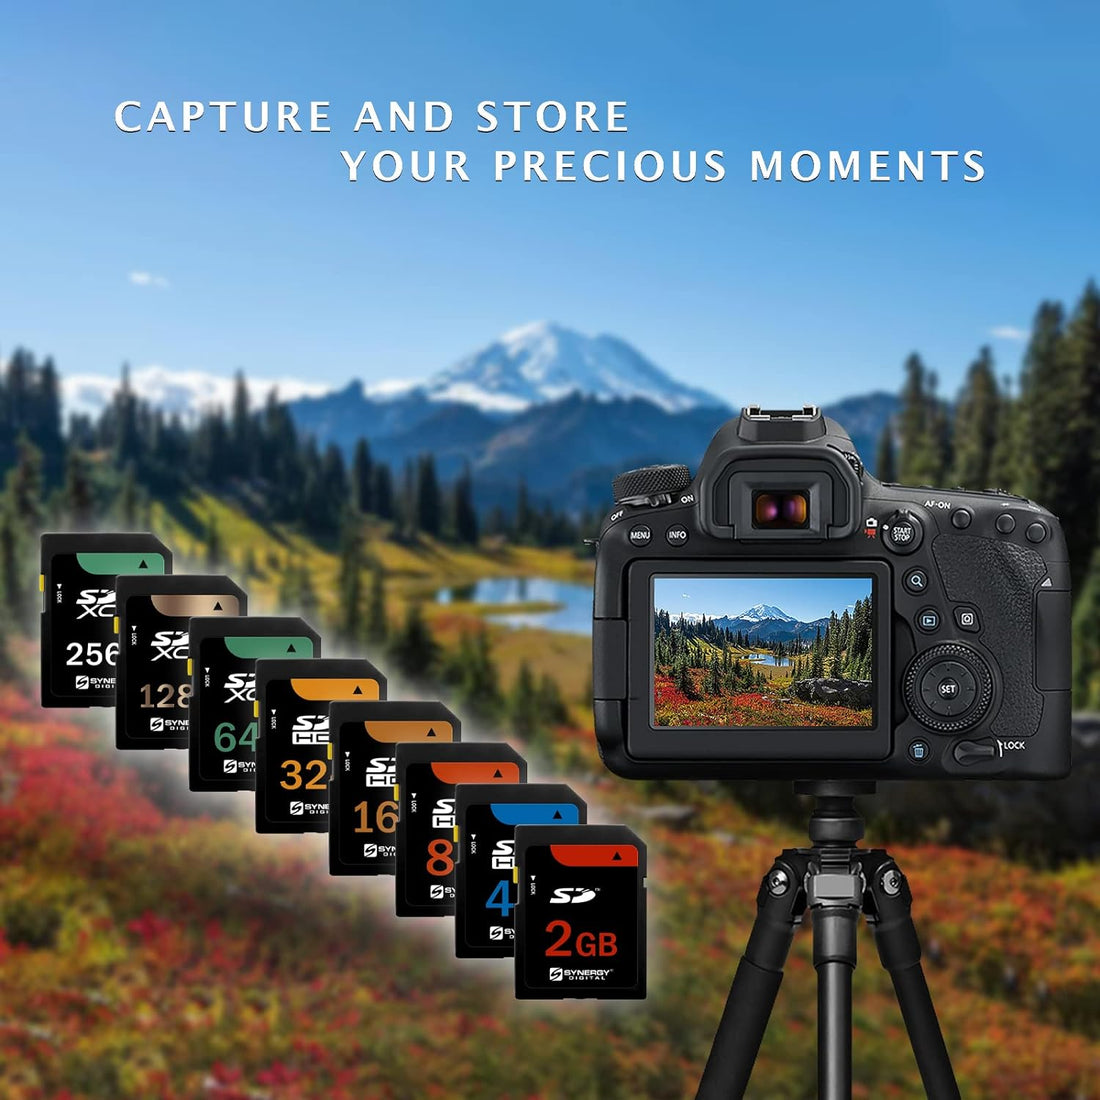 Synergy Digital 64GB, SDXC UHS-I Memory Card, Compatible with Kodak PIXPRO FZ152 Digital Camera - Class 10, U1, 100MB/s, 300 Series